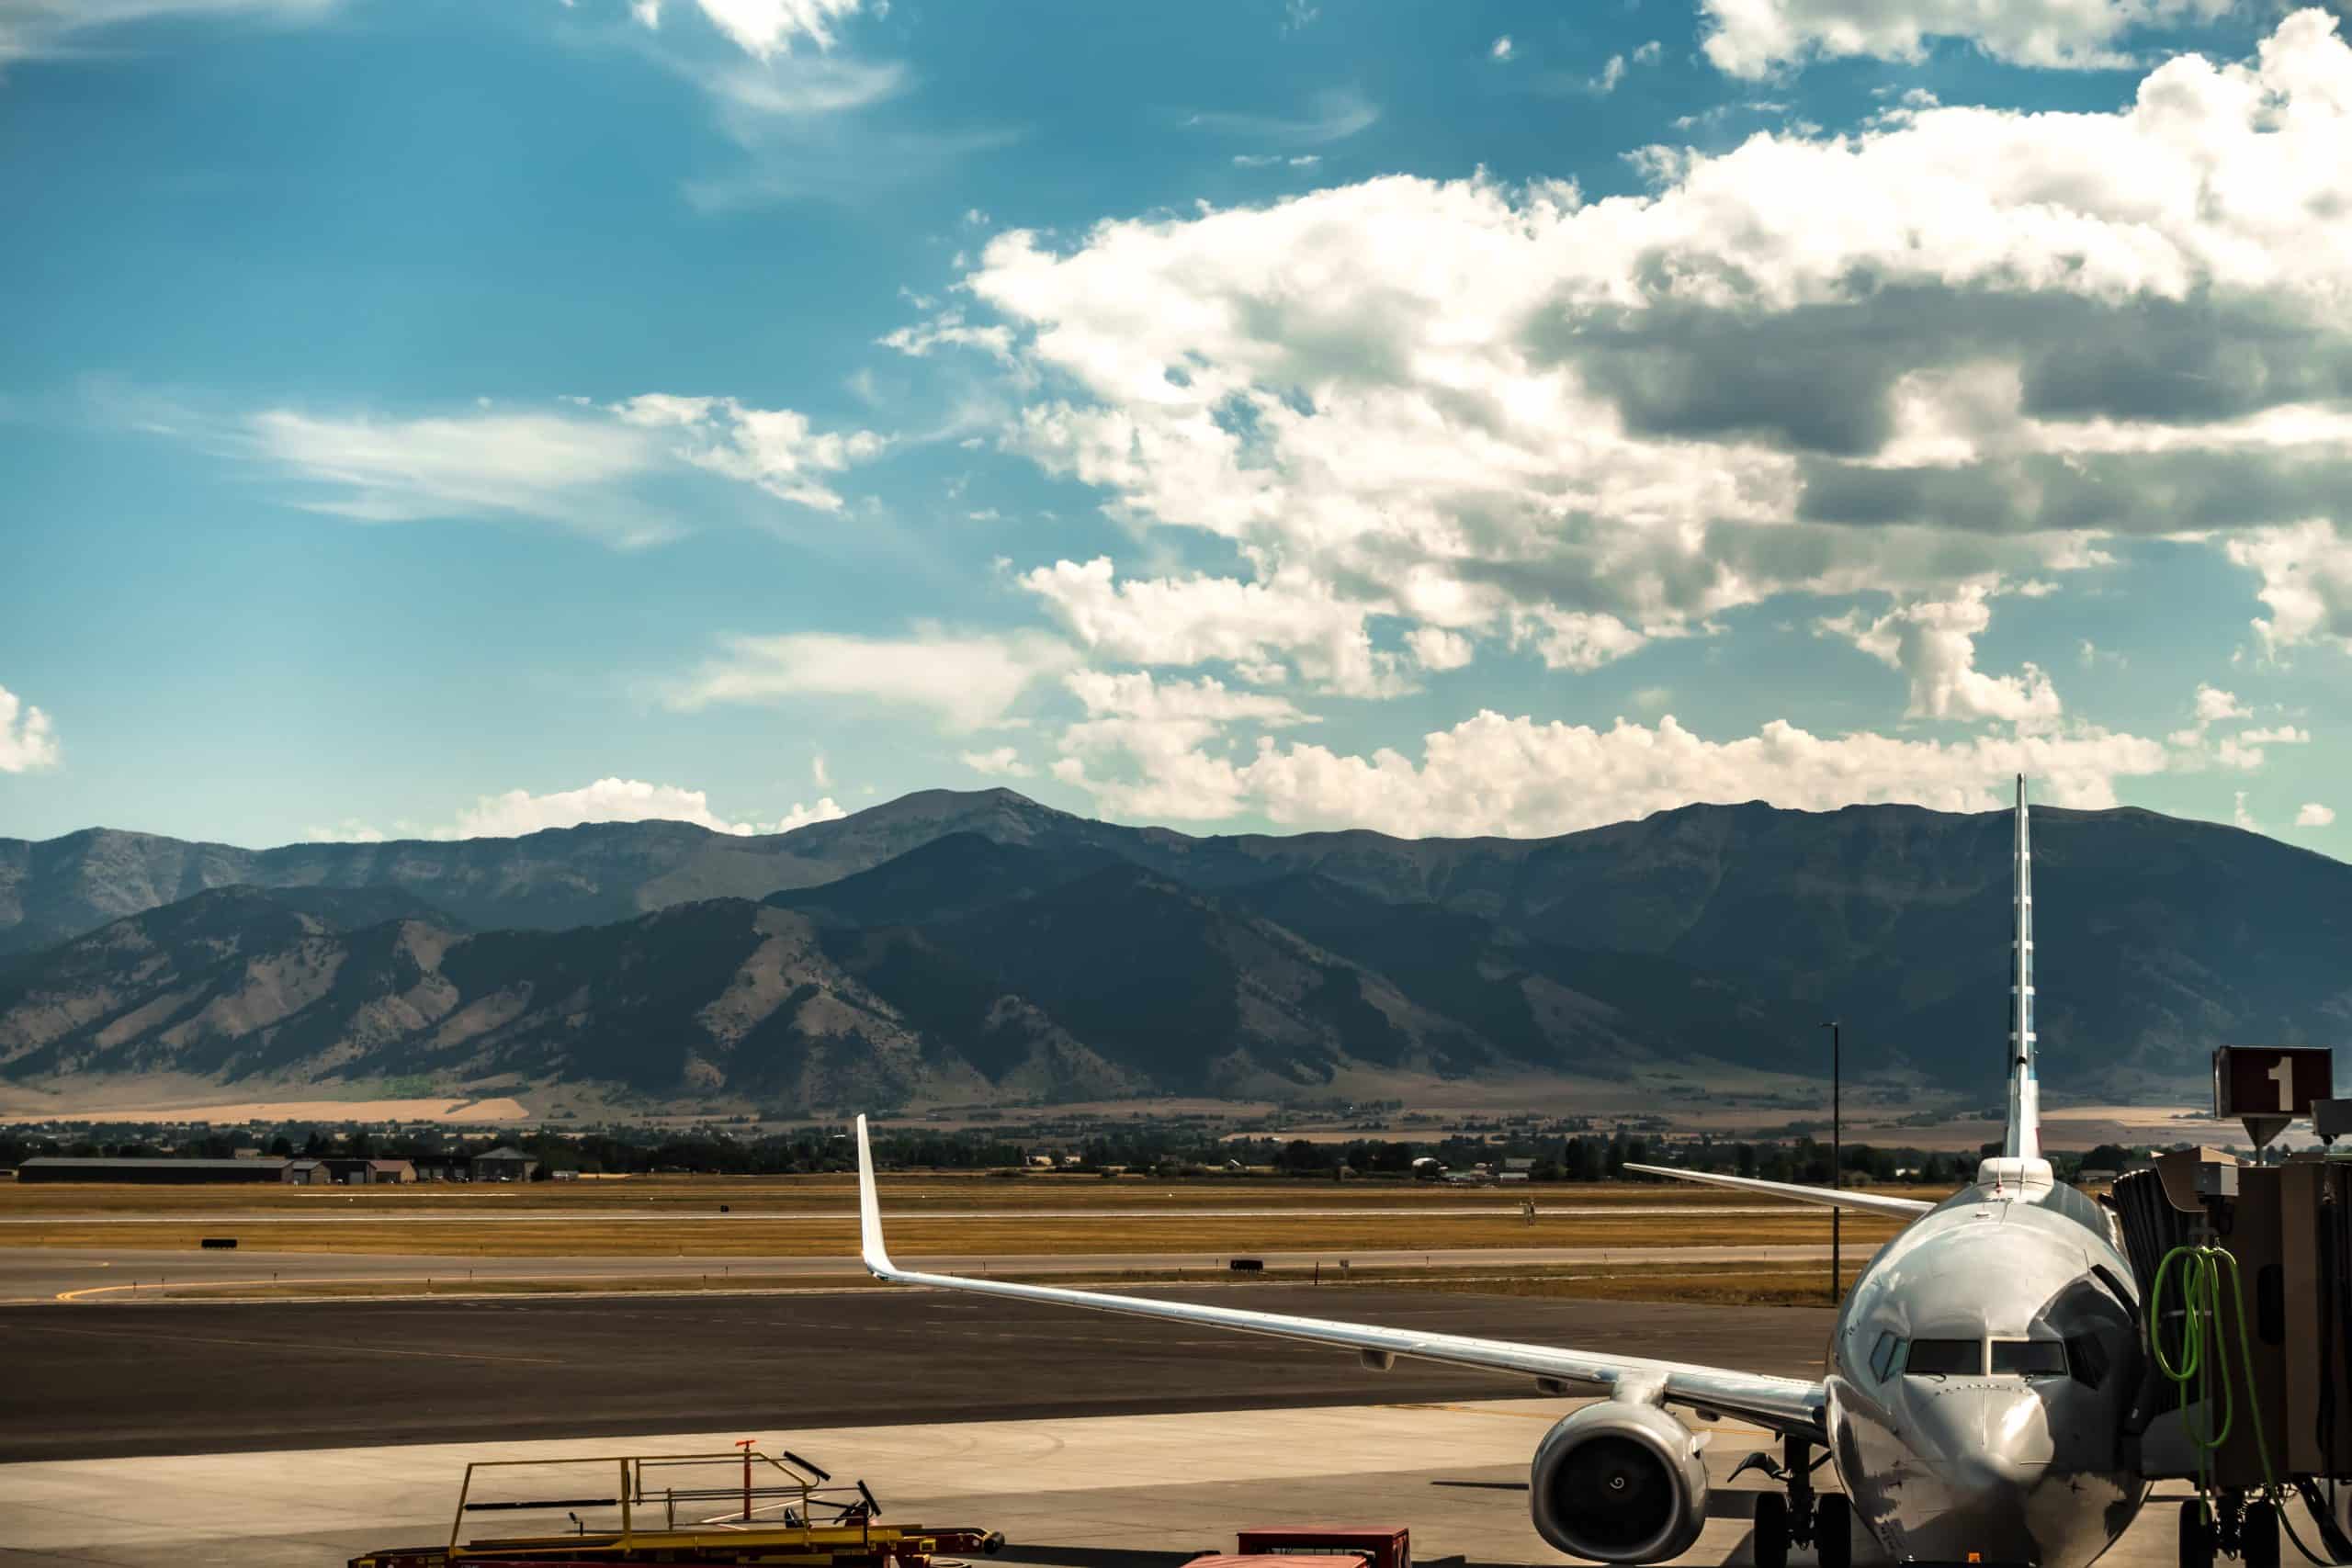 Bozeman, Montana airport and rocky mountains.